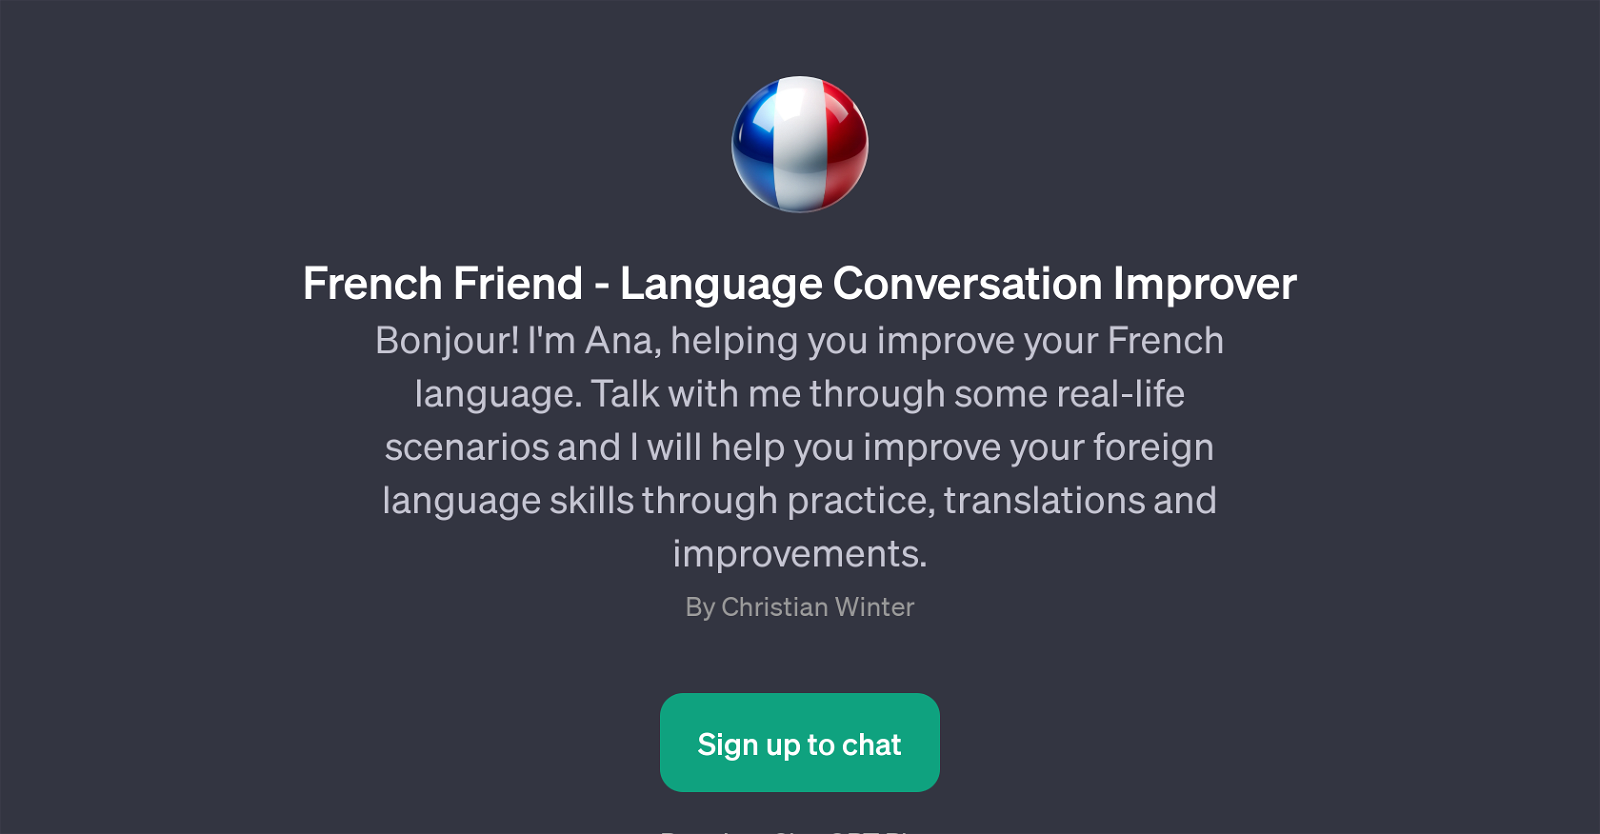 French Friend - Language Conversation Improver website